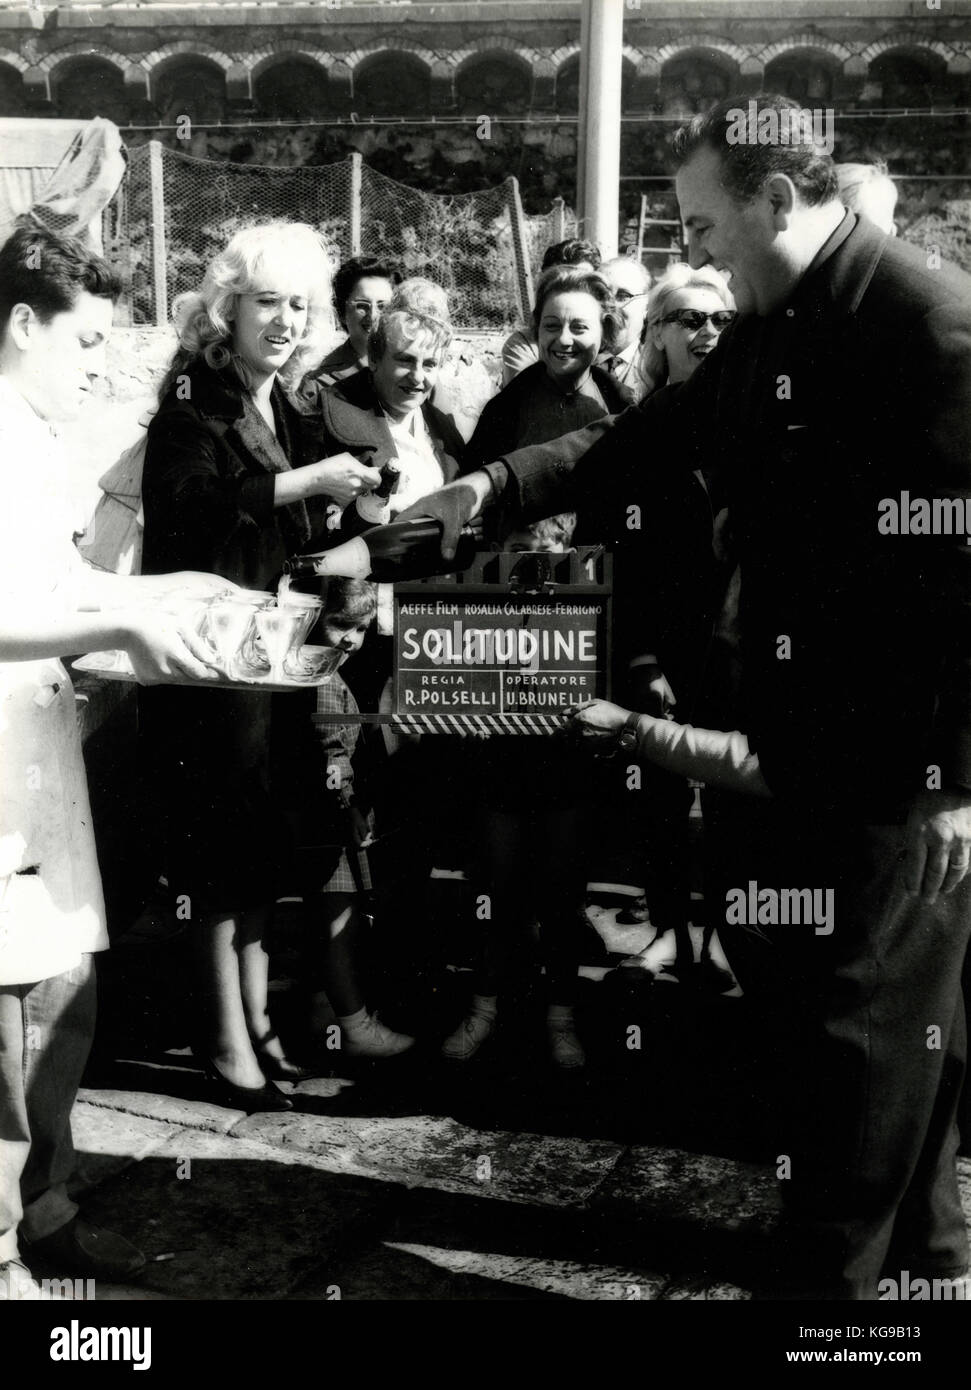 Film director Renato Polselli toasting during filming Solitudine, 1961 Italy Stock Photo